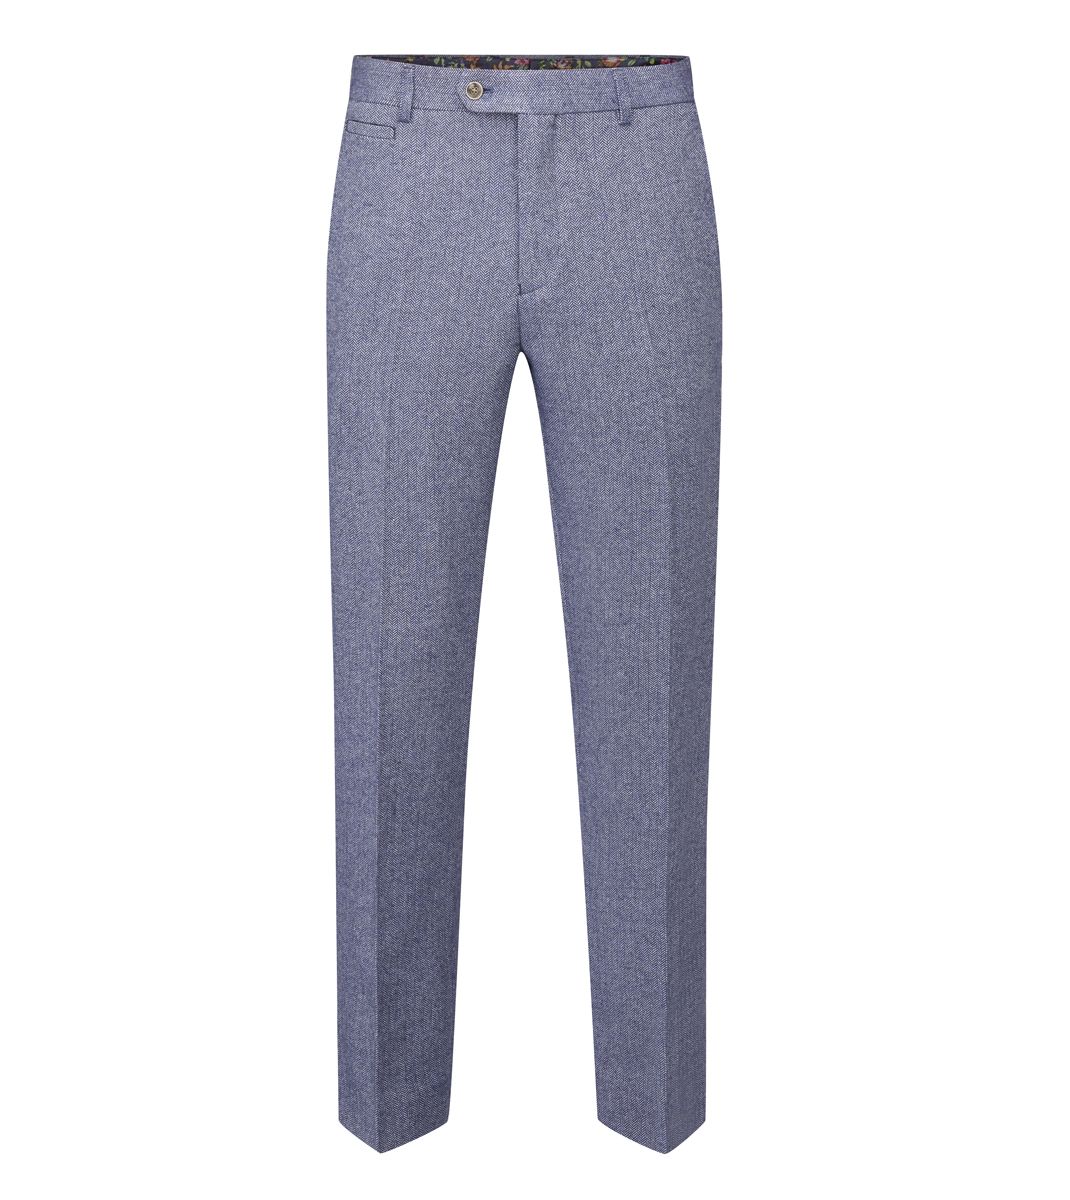 Jude Tweed Suit Trousers - Blue